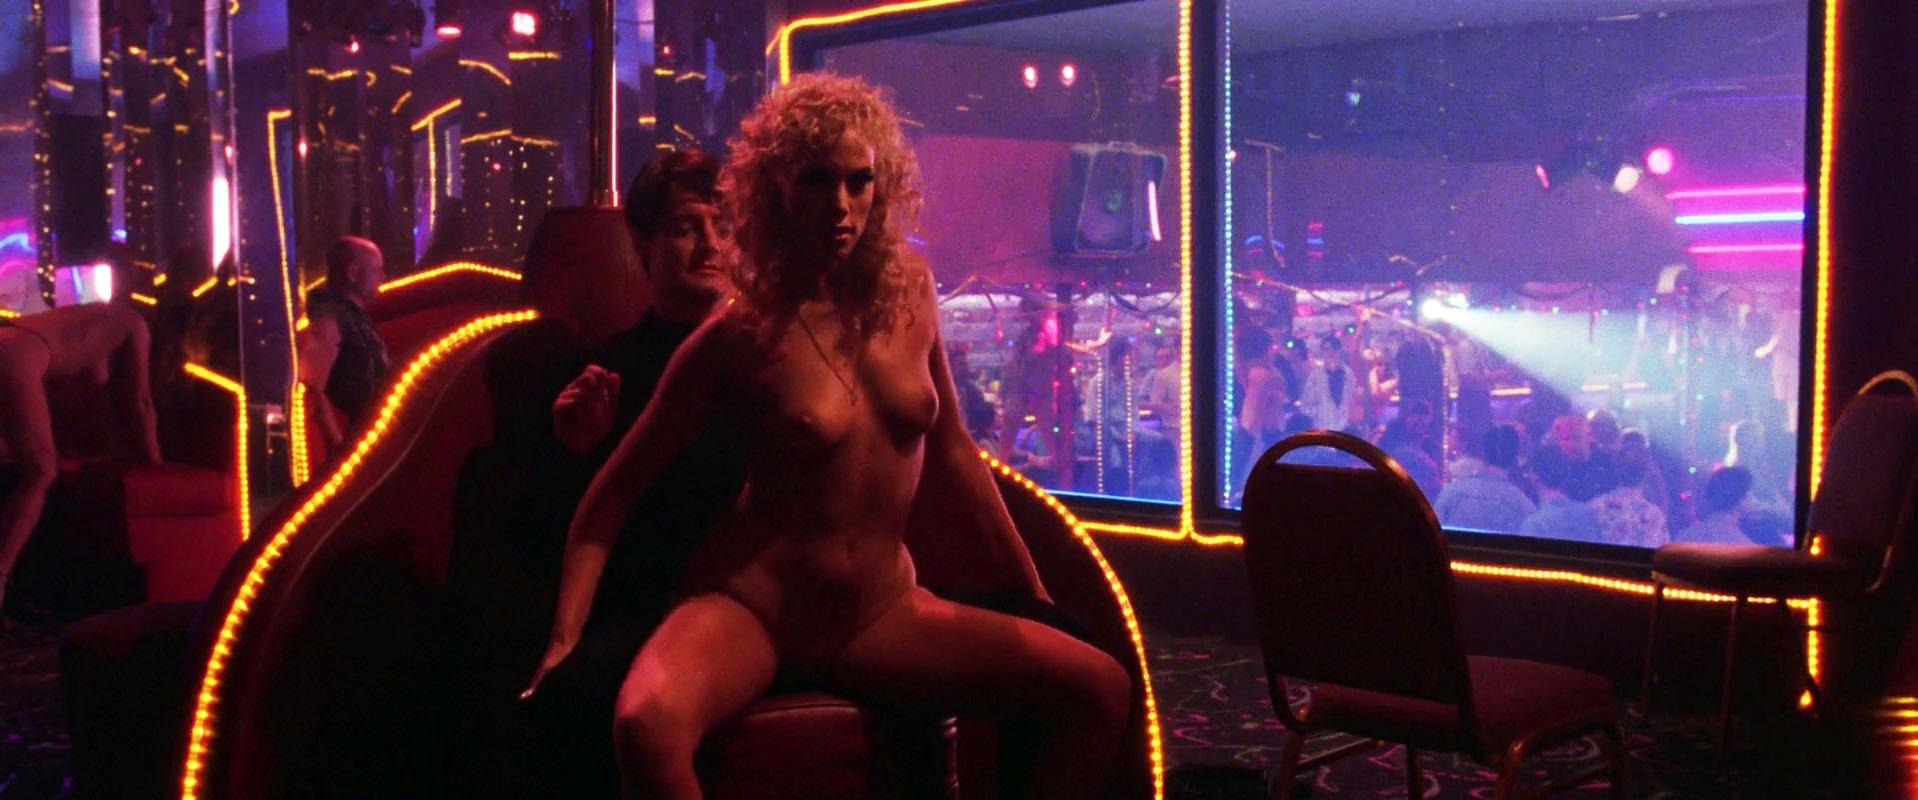 Elizabeth Berkley nude - Showgirls (1995)